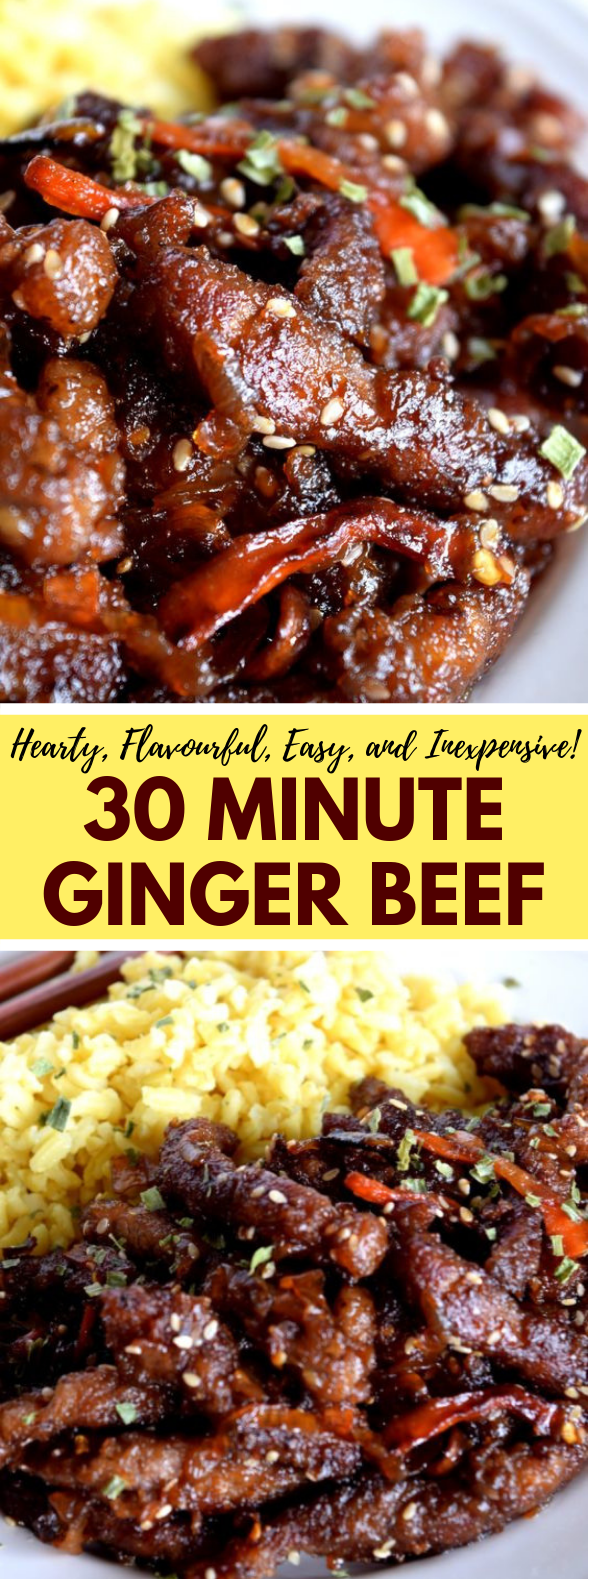 30 Minute Ginger Beef #dinner #recipe 